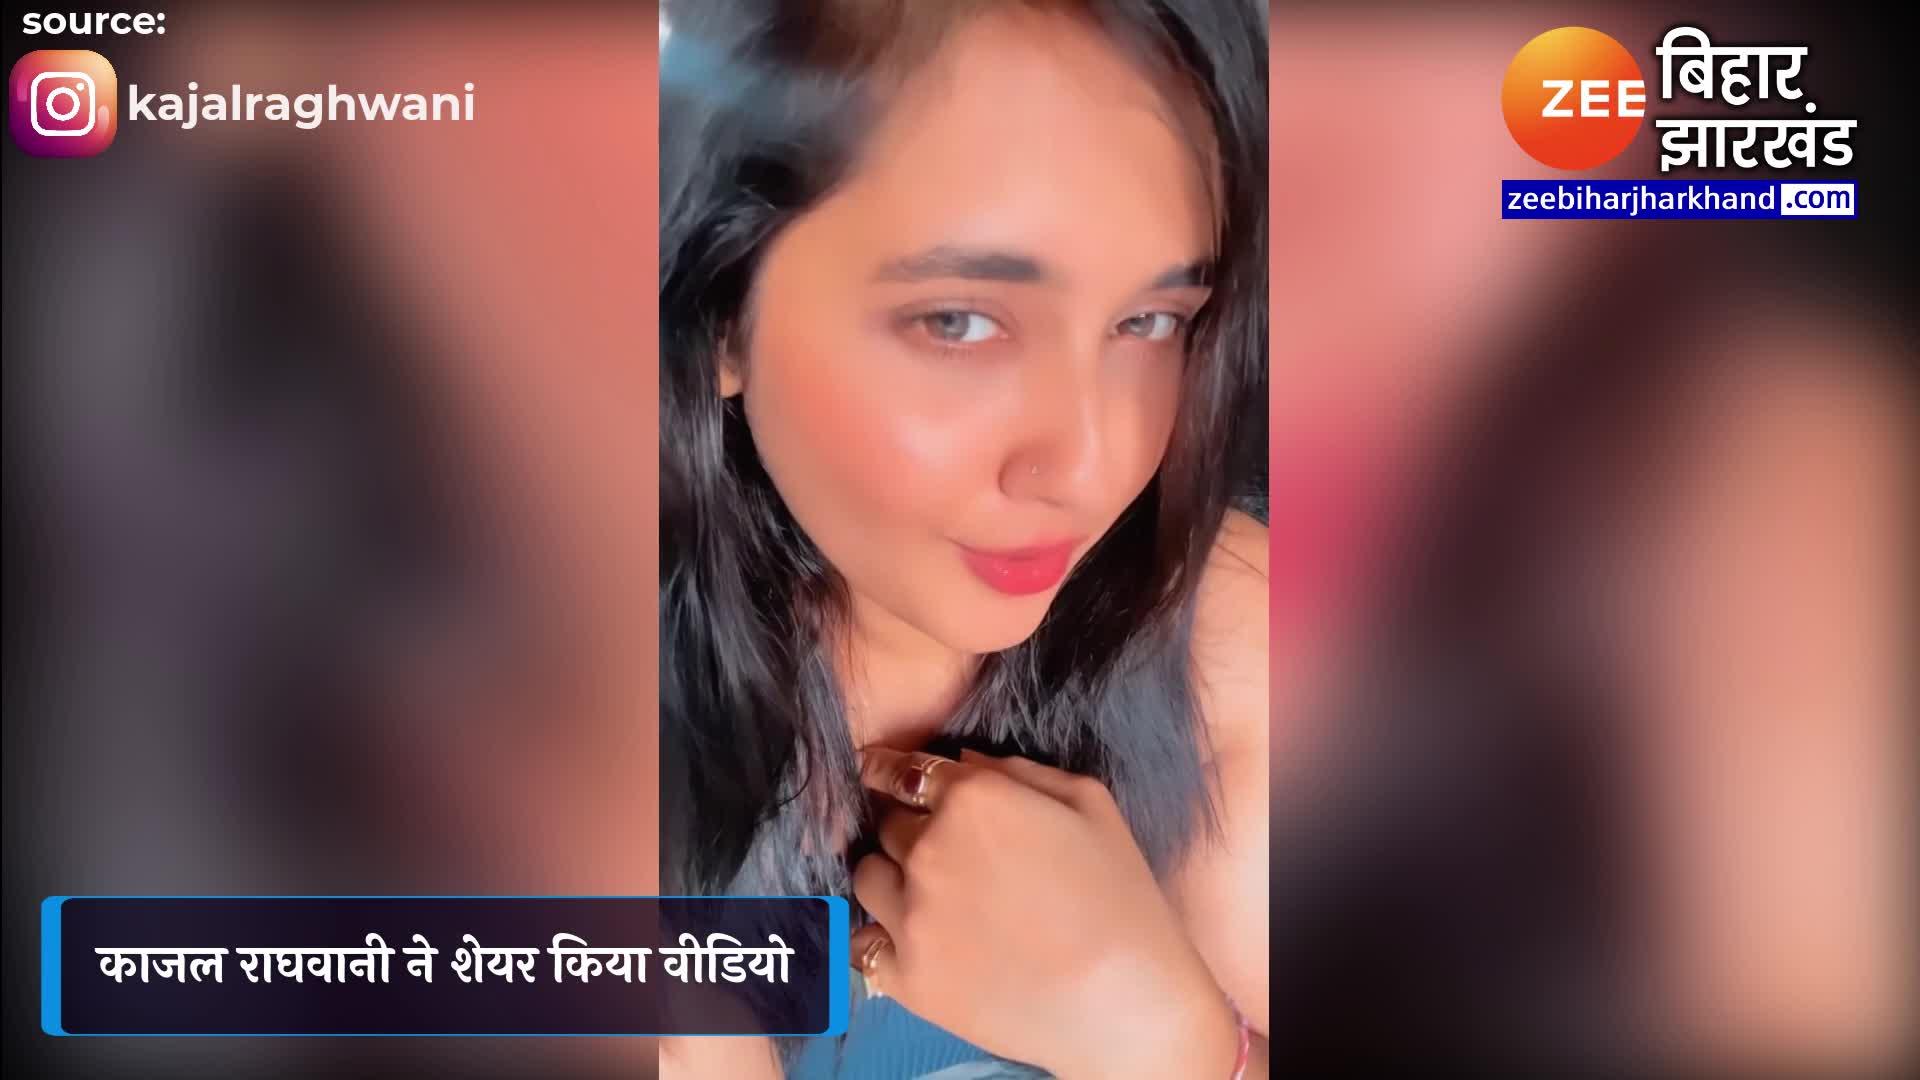 1920px x 1080px - Kajal Raghwani publicly expressed her love video viral | à¤•à¤¾à¤œà¤² à¤°à¤¾à¤˜à¤µà¤¾à¤¨à¥€ à¤¨à¥‡  à¤¸à¤°à¥‡à¤†à¤® à¤•à¤° à¤¦à¤¿à¤¯à¤¾ à¤ªà¥à¤¯à¤¾à¤° à¤•à¤¾ à¤‡à¤œà¤¹à¤¾à¤°, à¤µà¥€à¤¡à¤¿à¤¯à¥‹ à¤µà¤¾à¤¯à¤°à¤². | Zee News Hindi